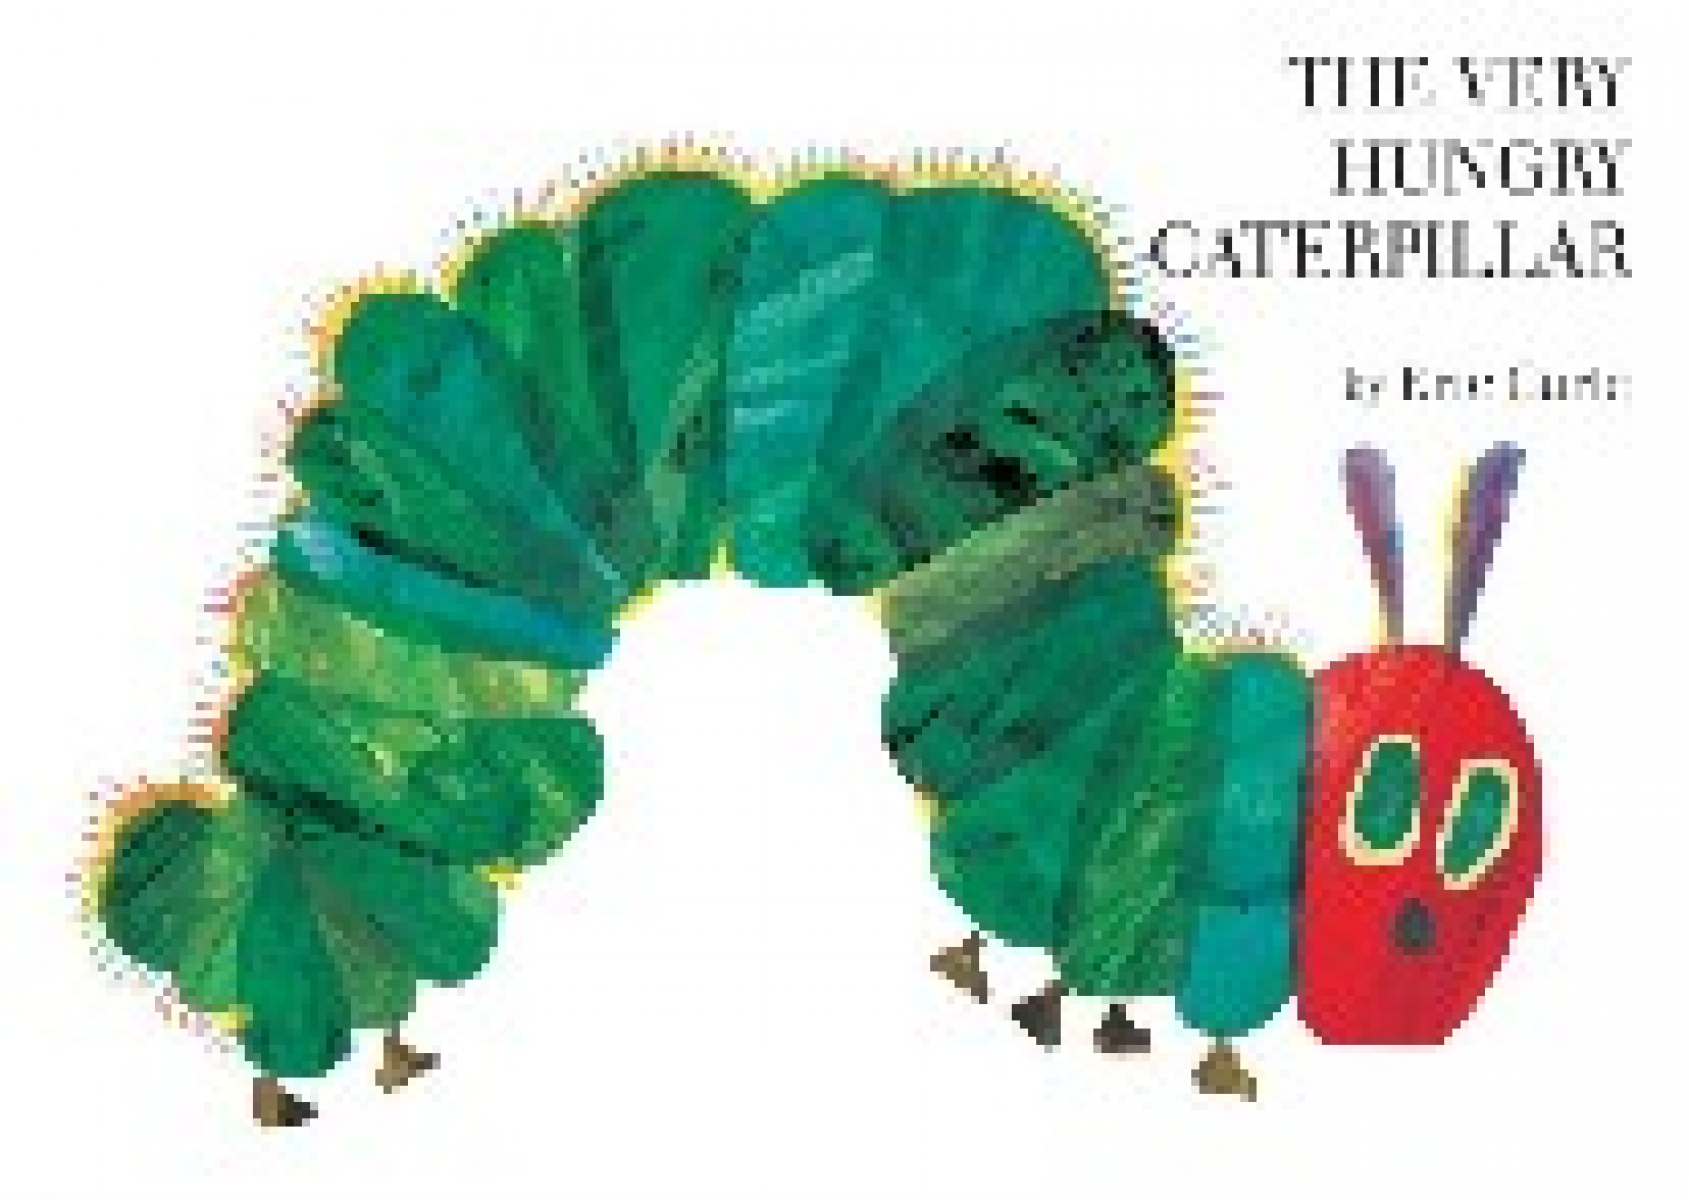 Carle Eric Very hungry caterpillar board book 